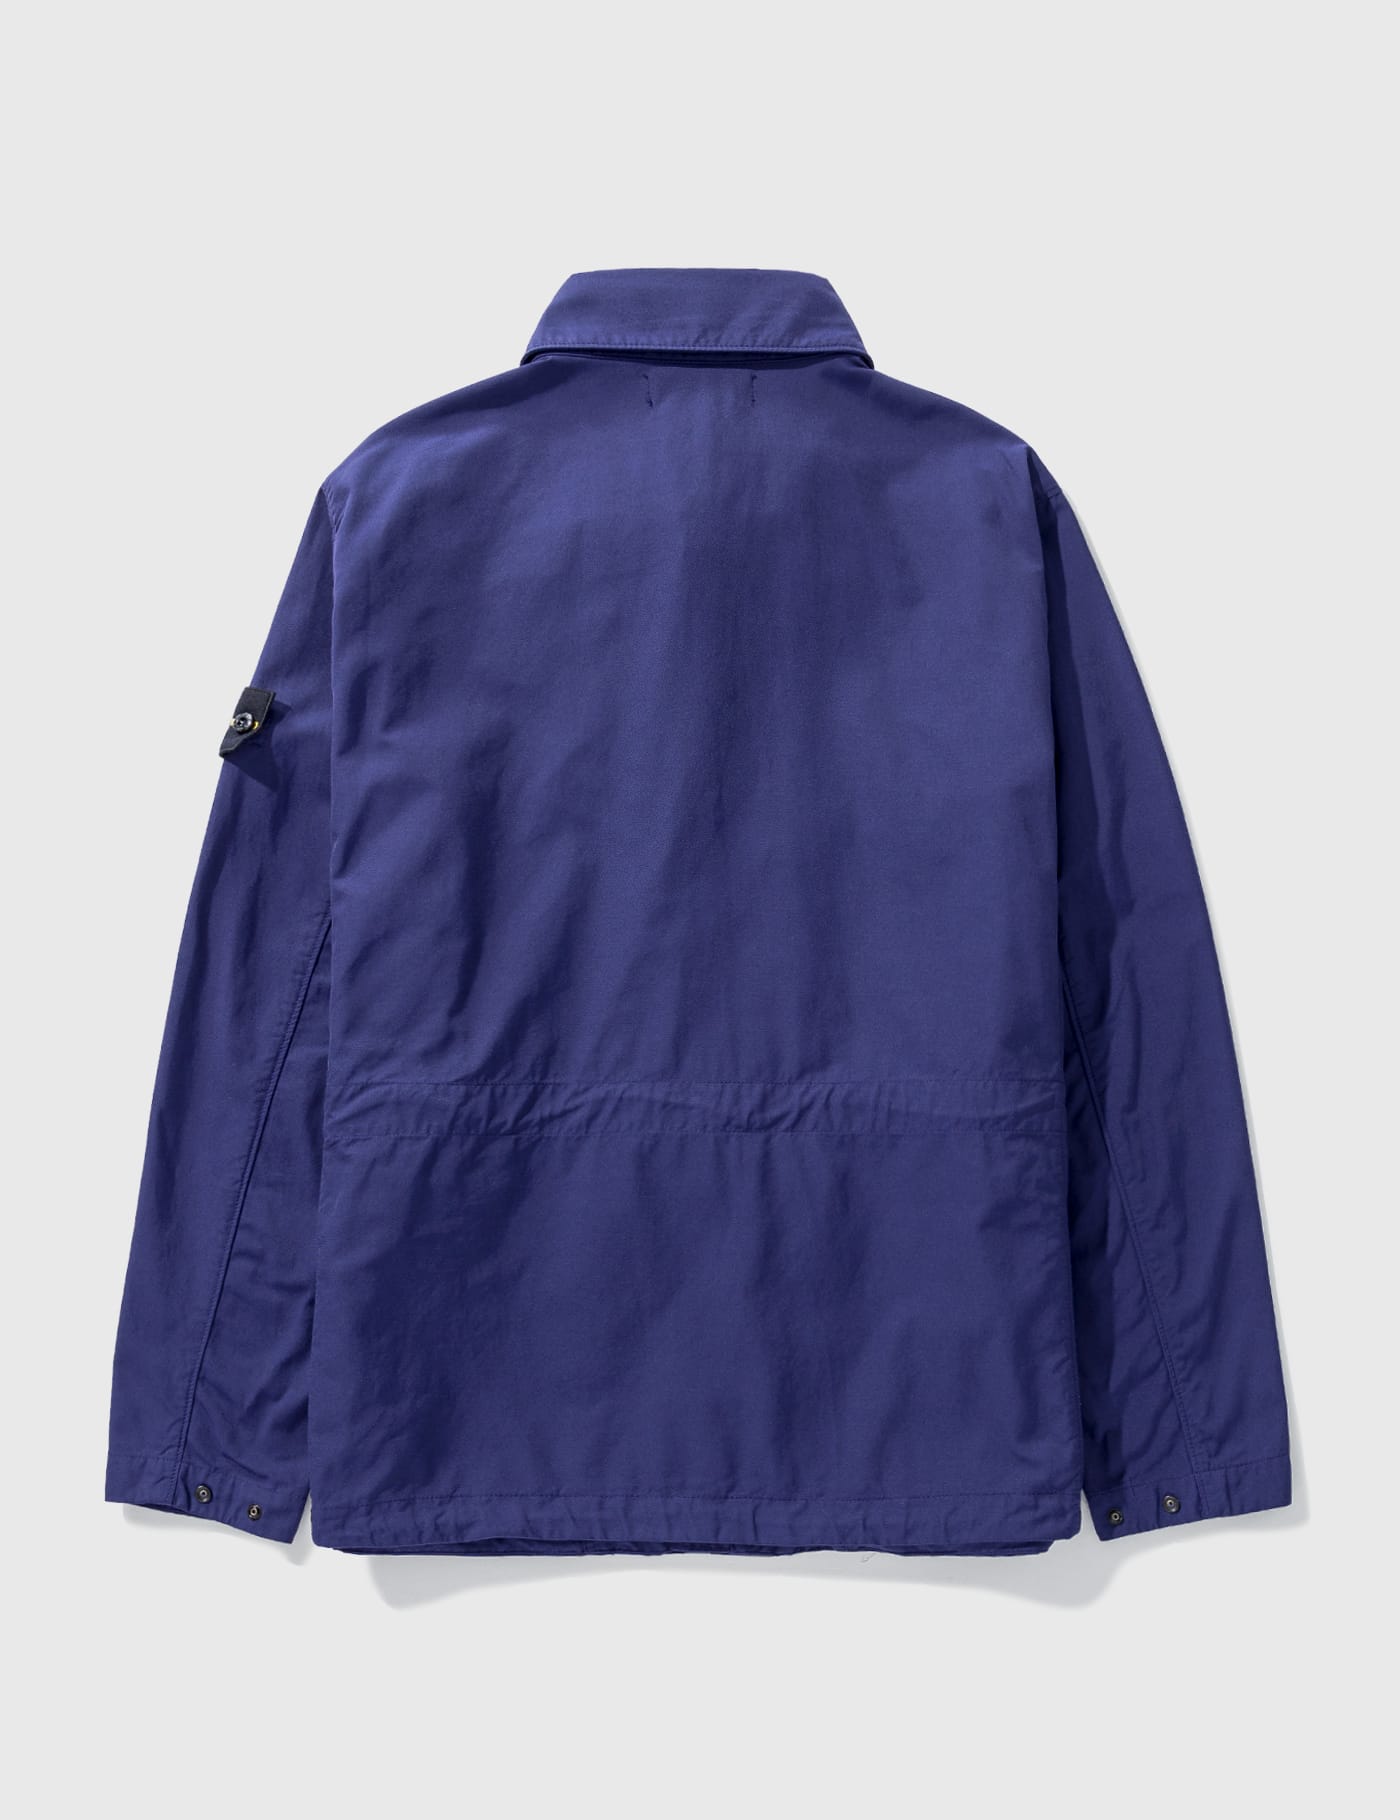 Stone Island - Garment Dyed Nylon Batavia Field Jacket | HBX - Globally  Curated Fashion and Lifestyle by Hypebeast